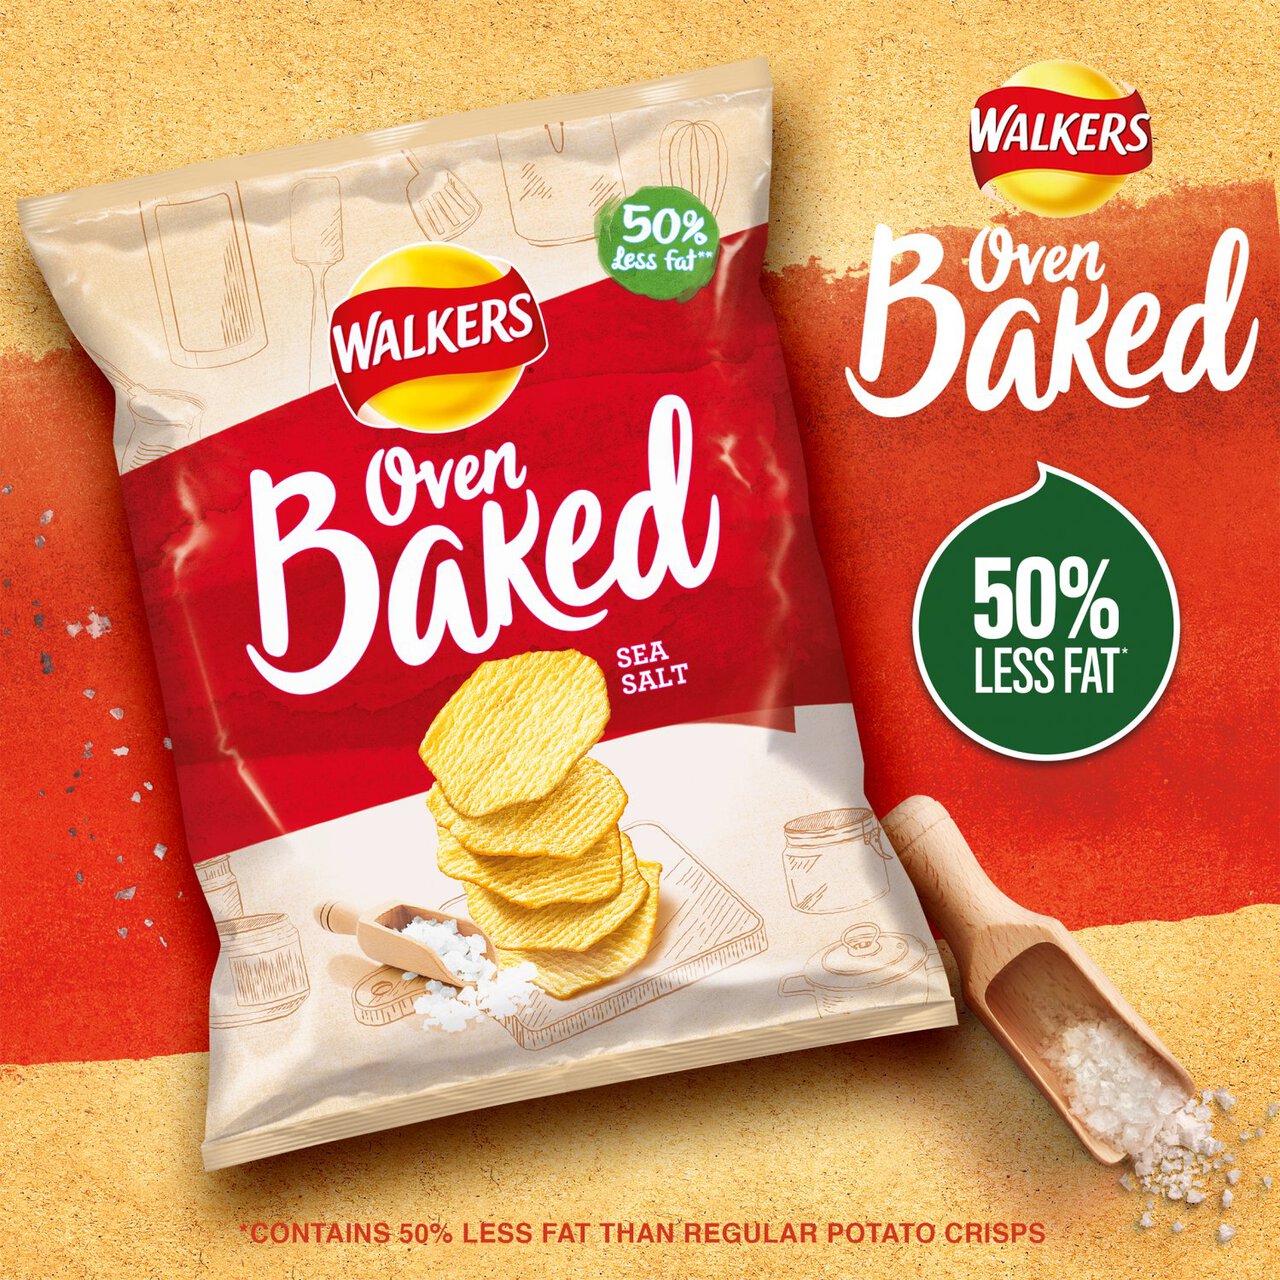 Walkers Oven Baked Sea Salt Multipack Snacks 6 per pack